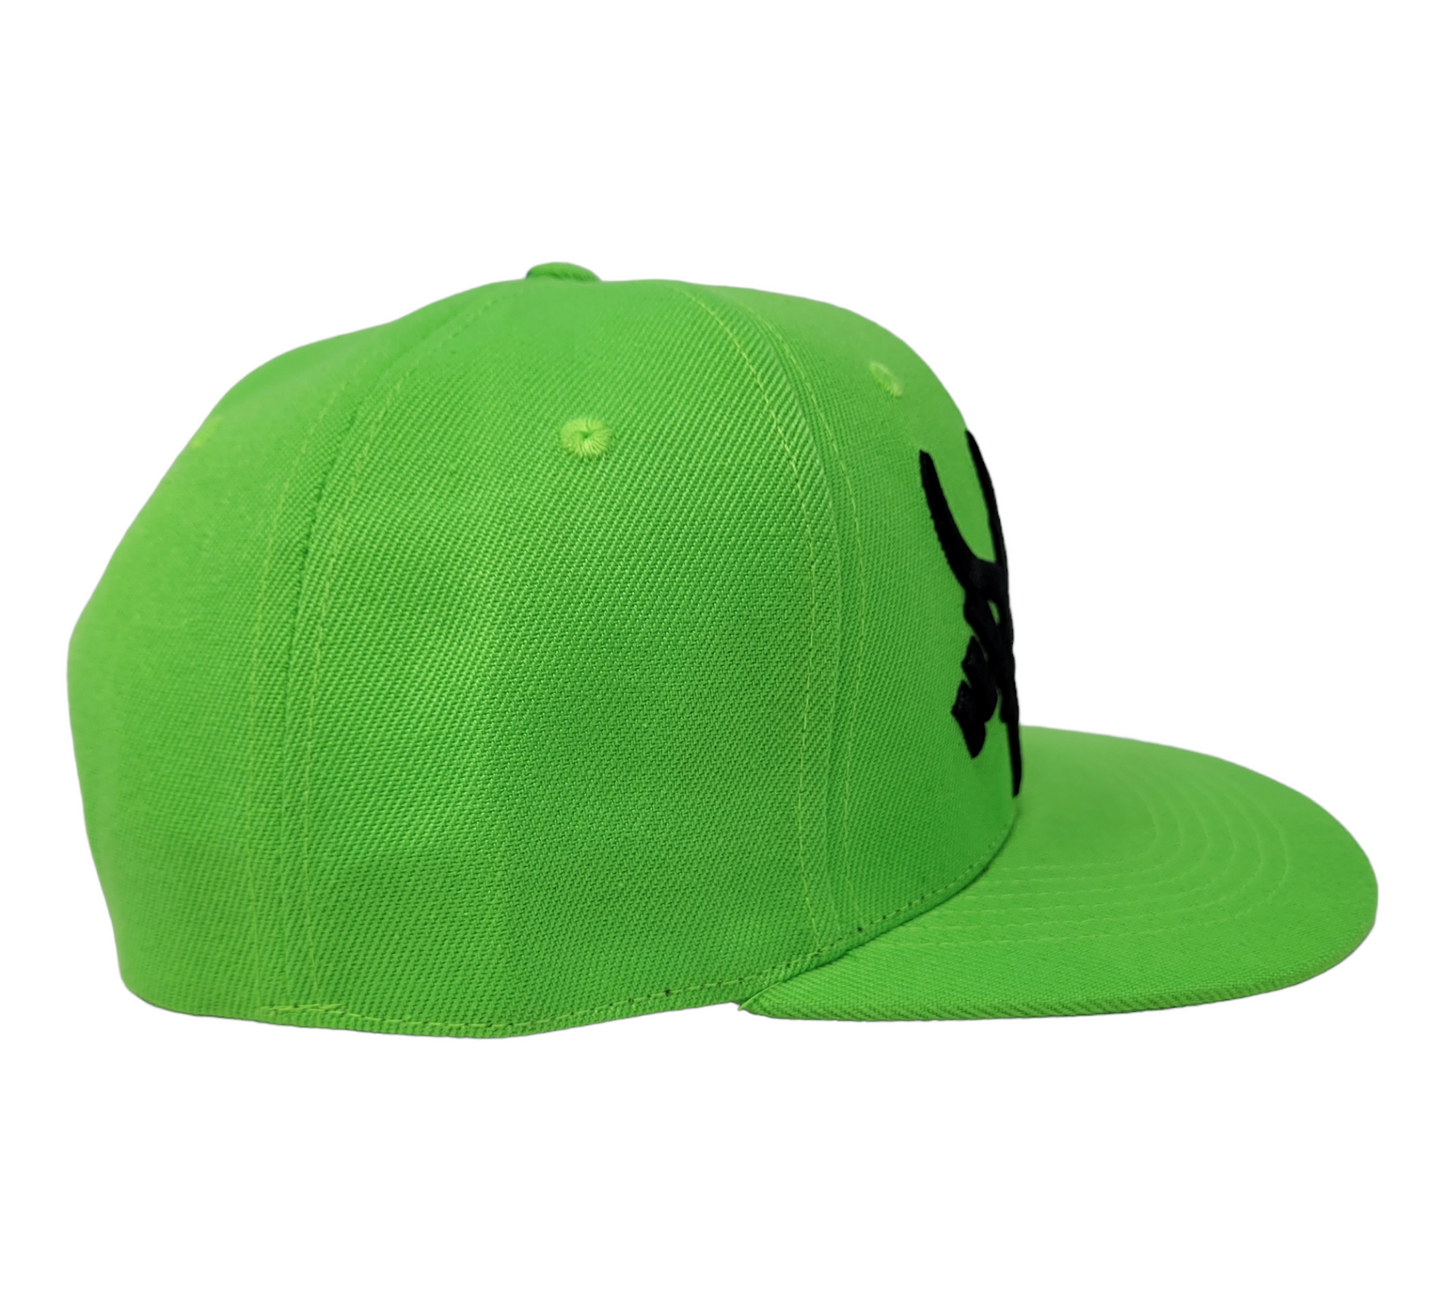 THE FLUORESCENT GREEN 3D TAG LOGO SNAPBACK BASEBALL HAT